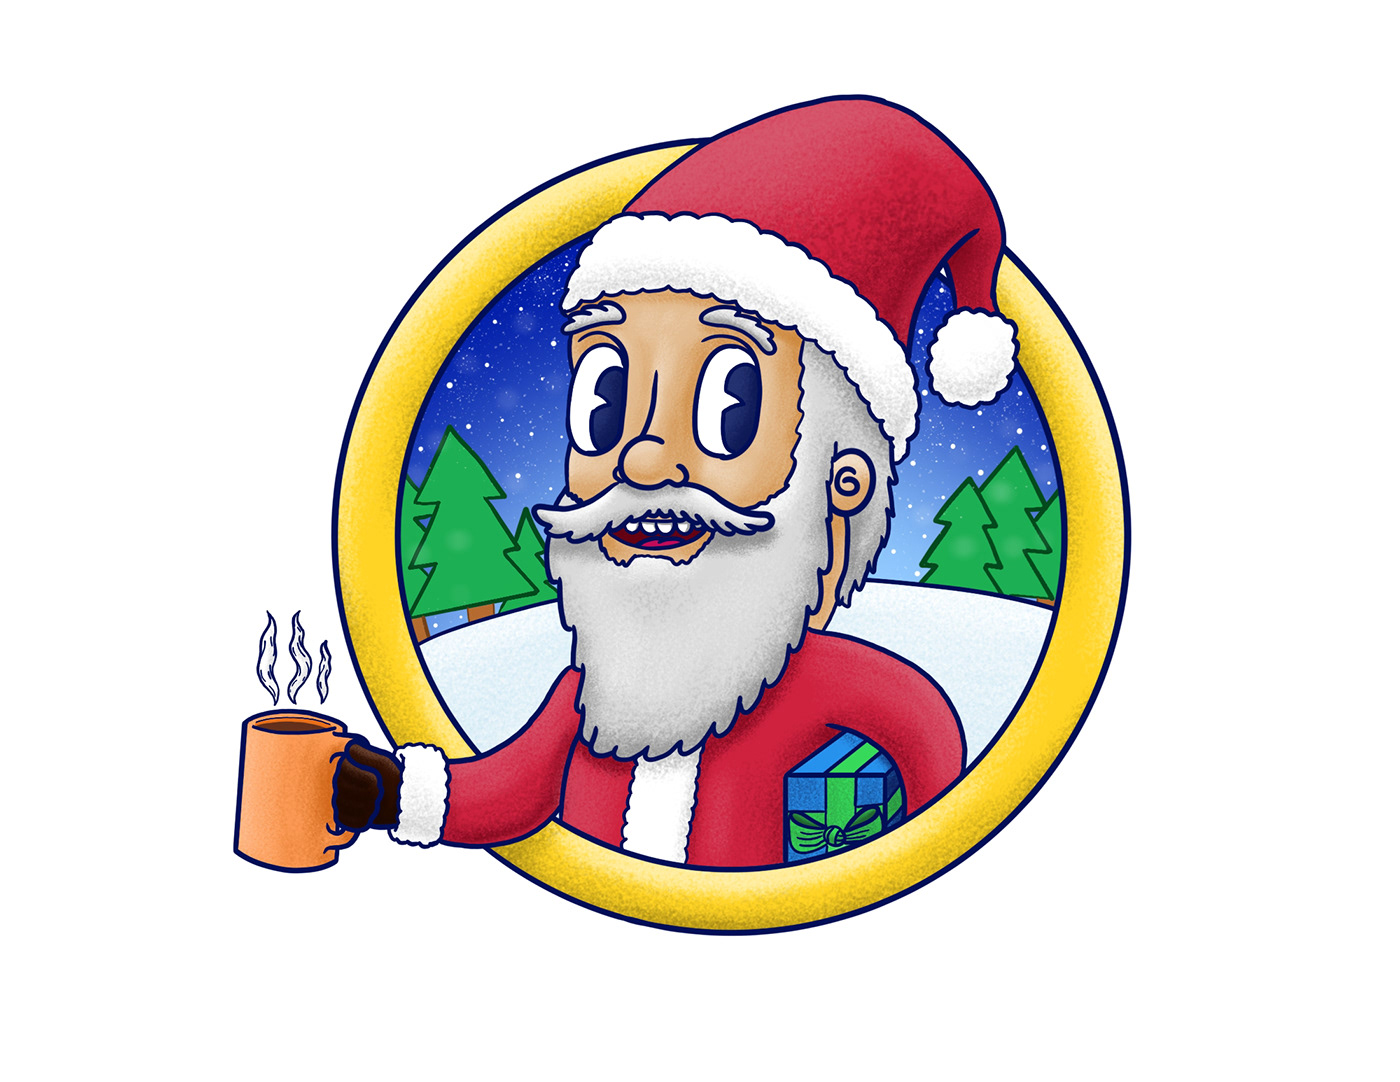 merry Merry Xmas xmas santa Santa Claus navidad Christmas Merry Christmas cartoon toon Character design 